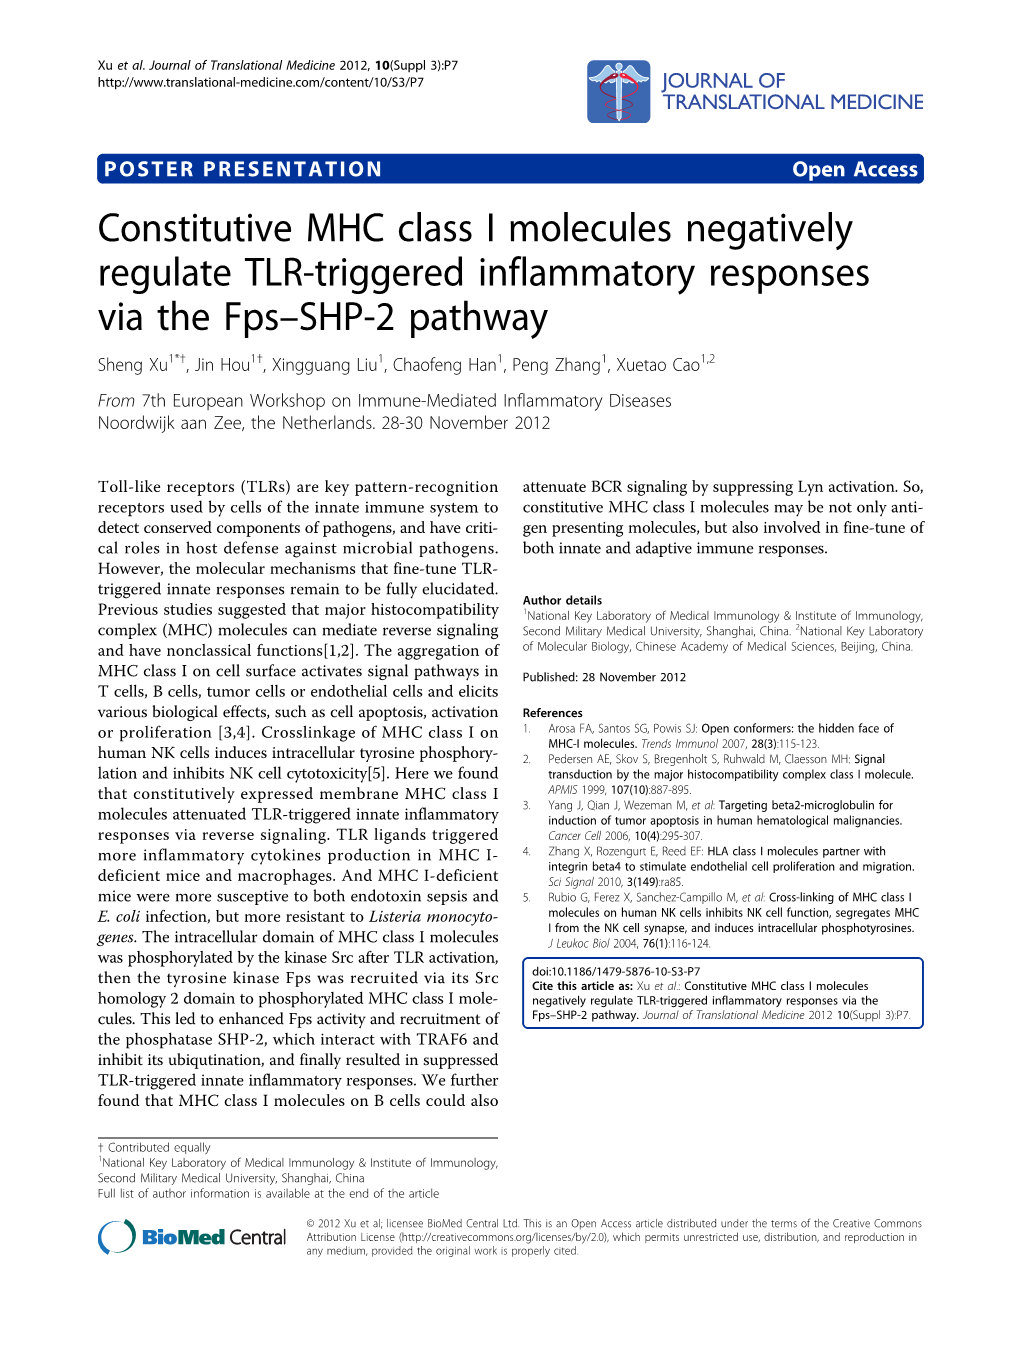 Constitutive MHC Class I Molecules Negatively Regulate